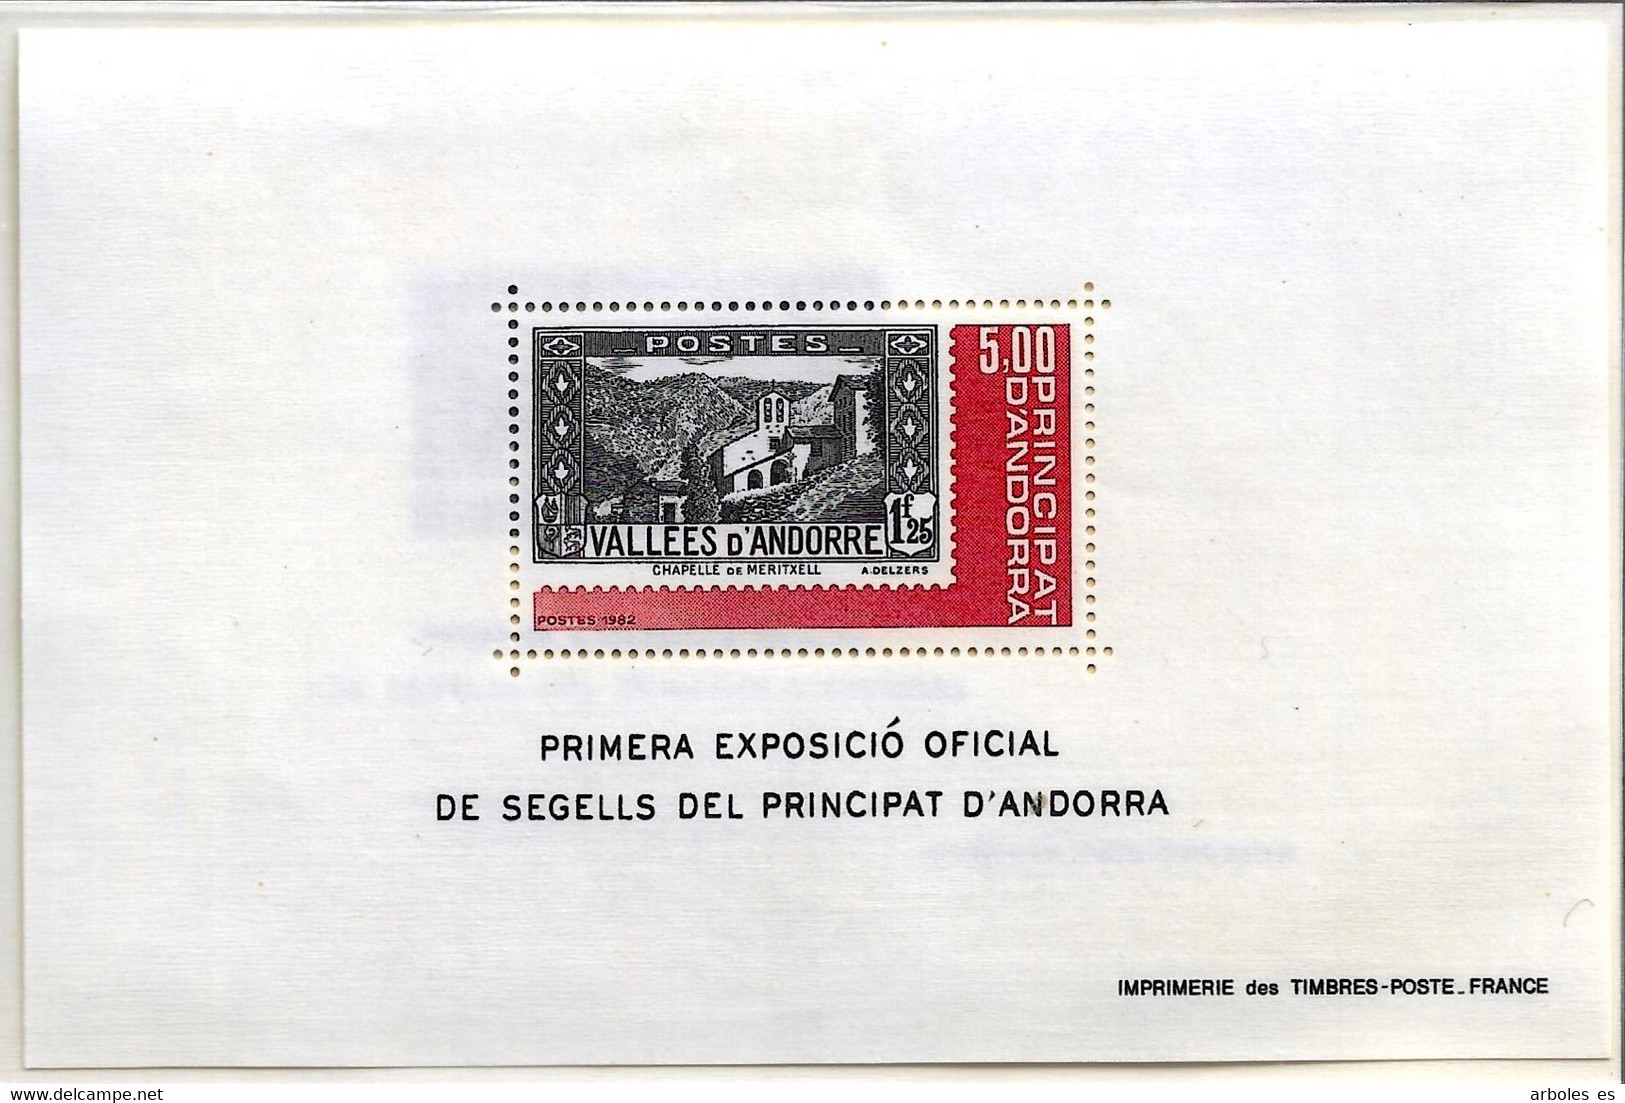 ANDORRA FRANCESA - EXPOSICION FALATELICA - AÑO 1982 - Nº CATALOGO YVERT 0001 - NUEVOS - Blocs-feuillets